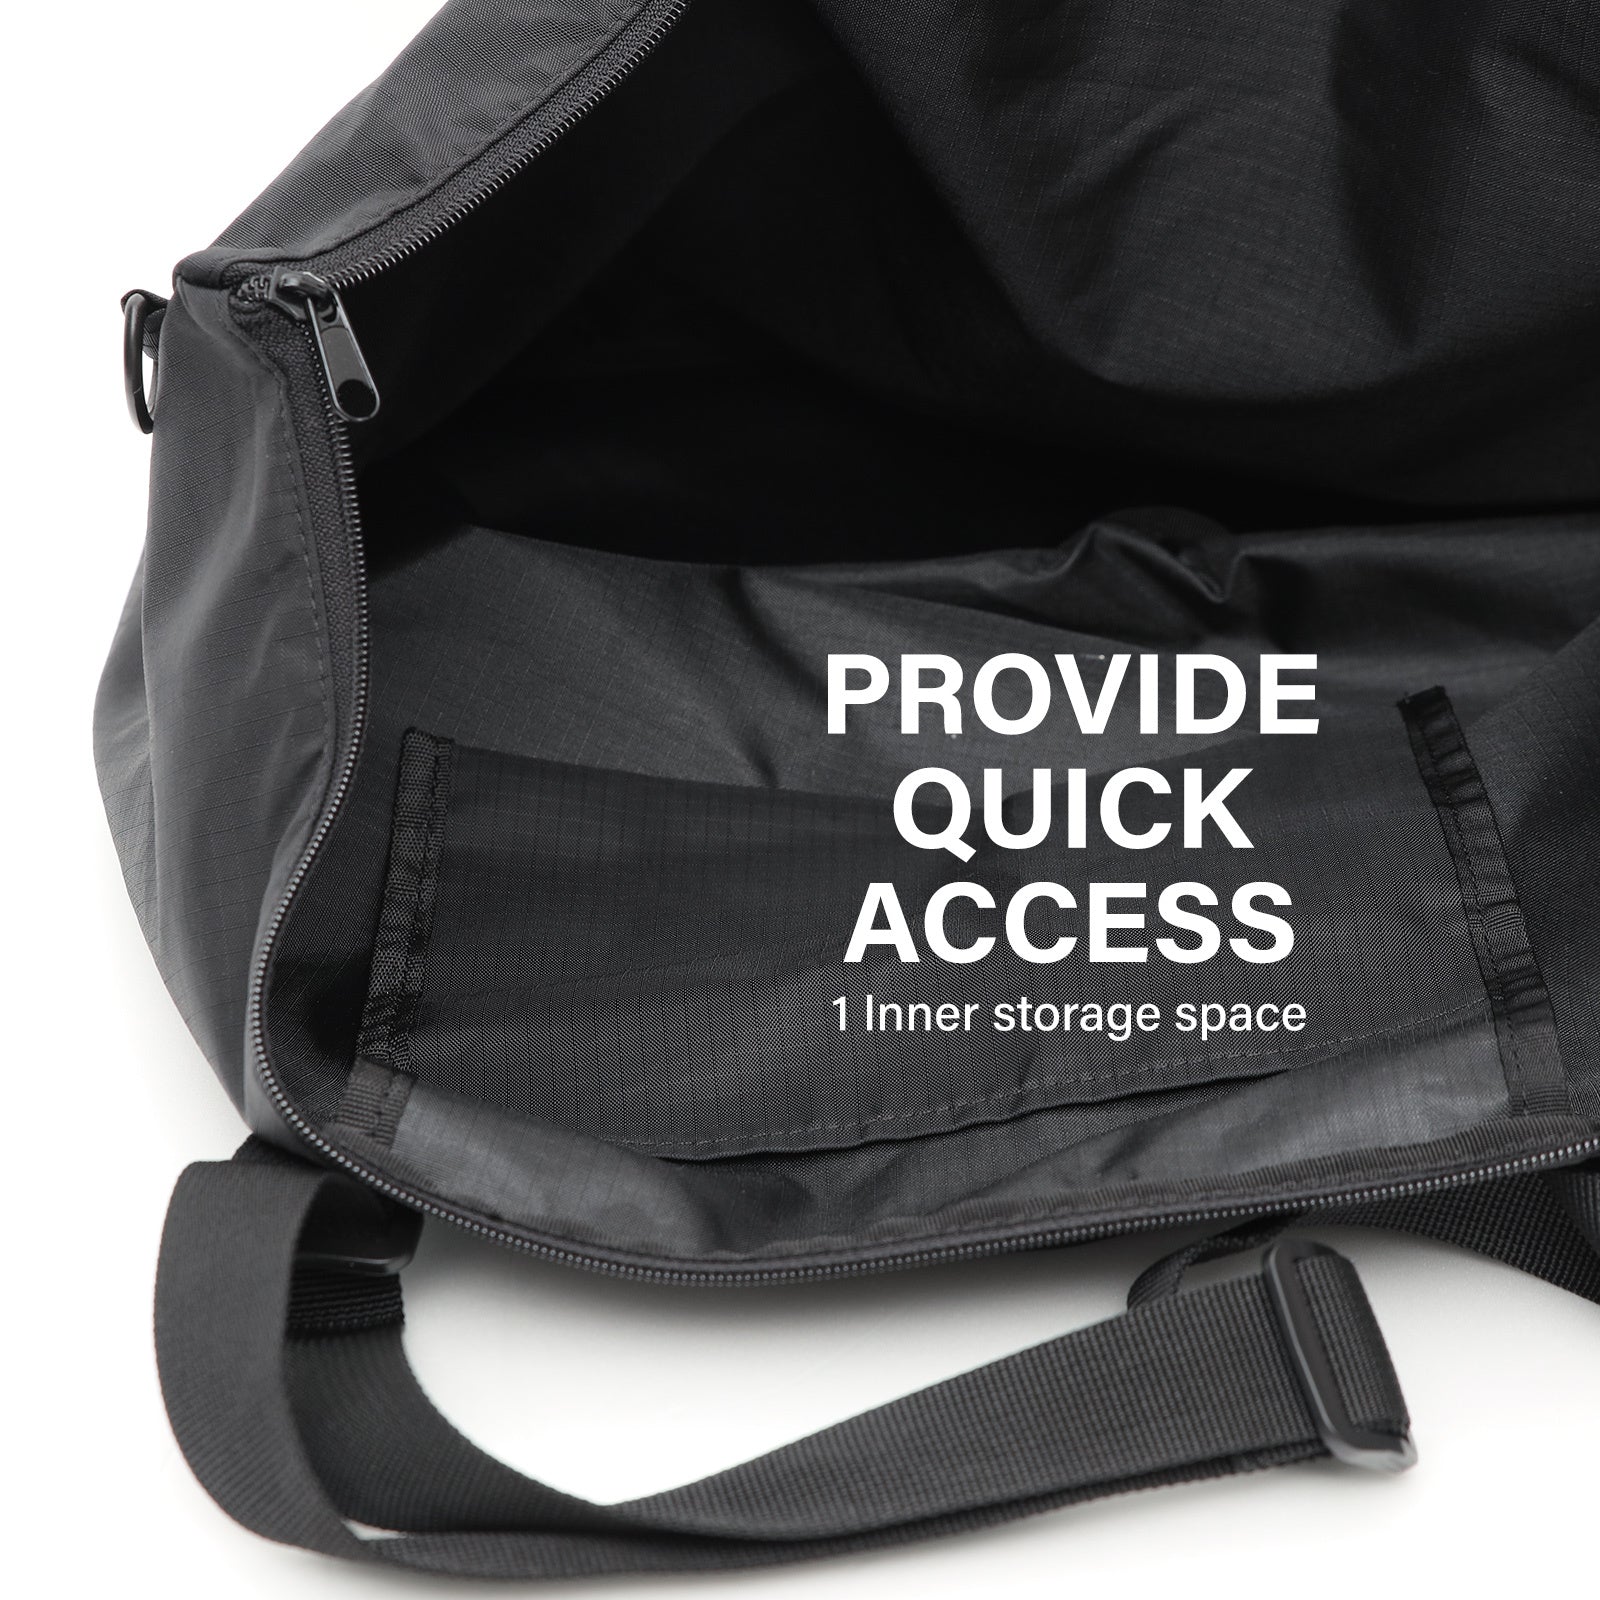 KOELE Black Shopper Bag Tote Bag Foldable Travel Laptop Grocery KO-DUAL